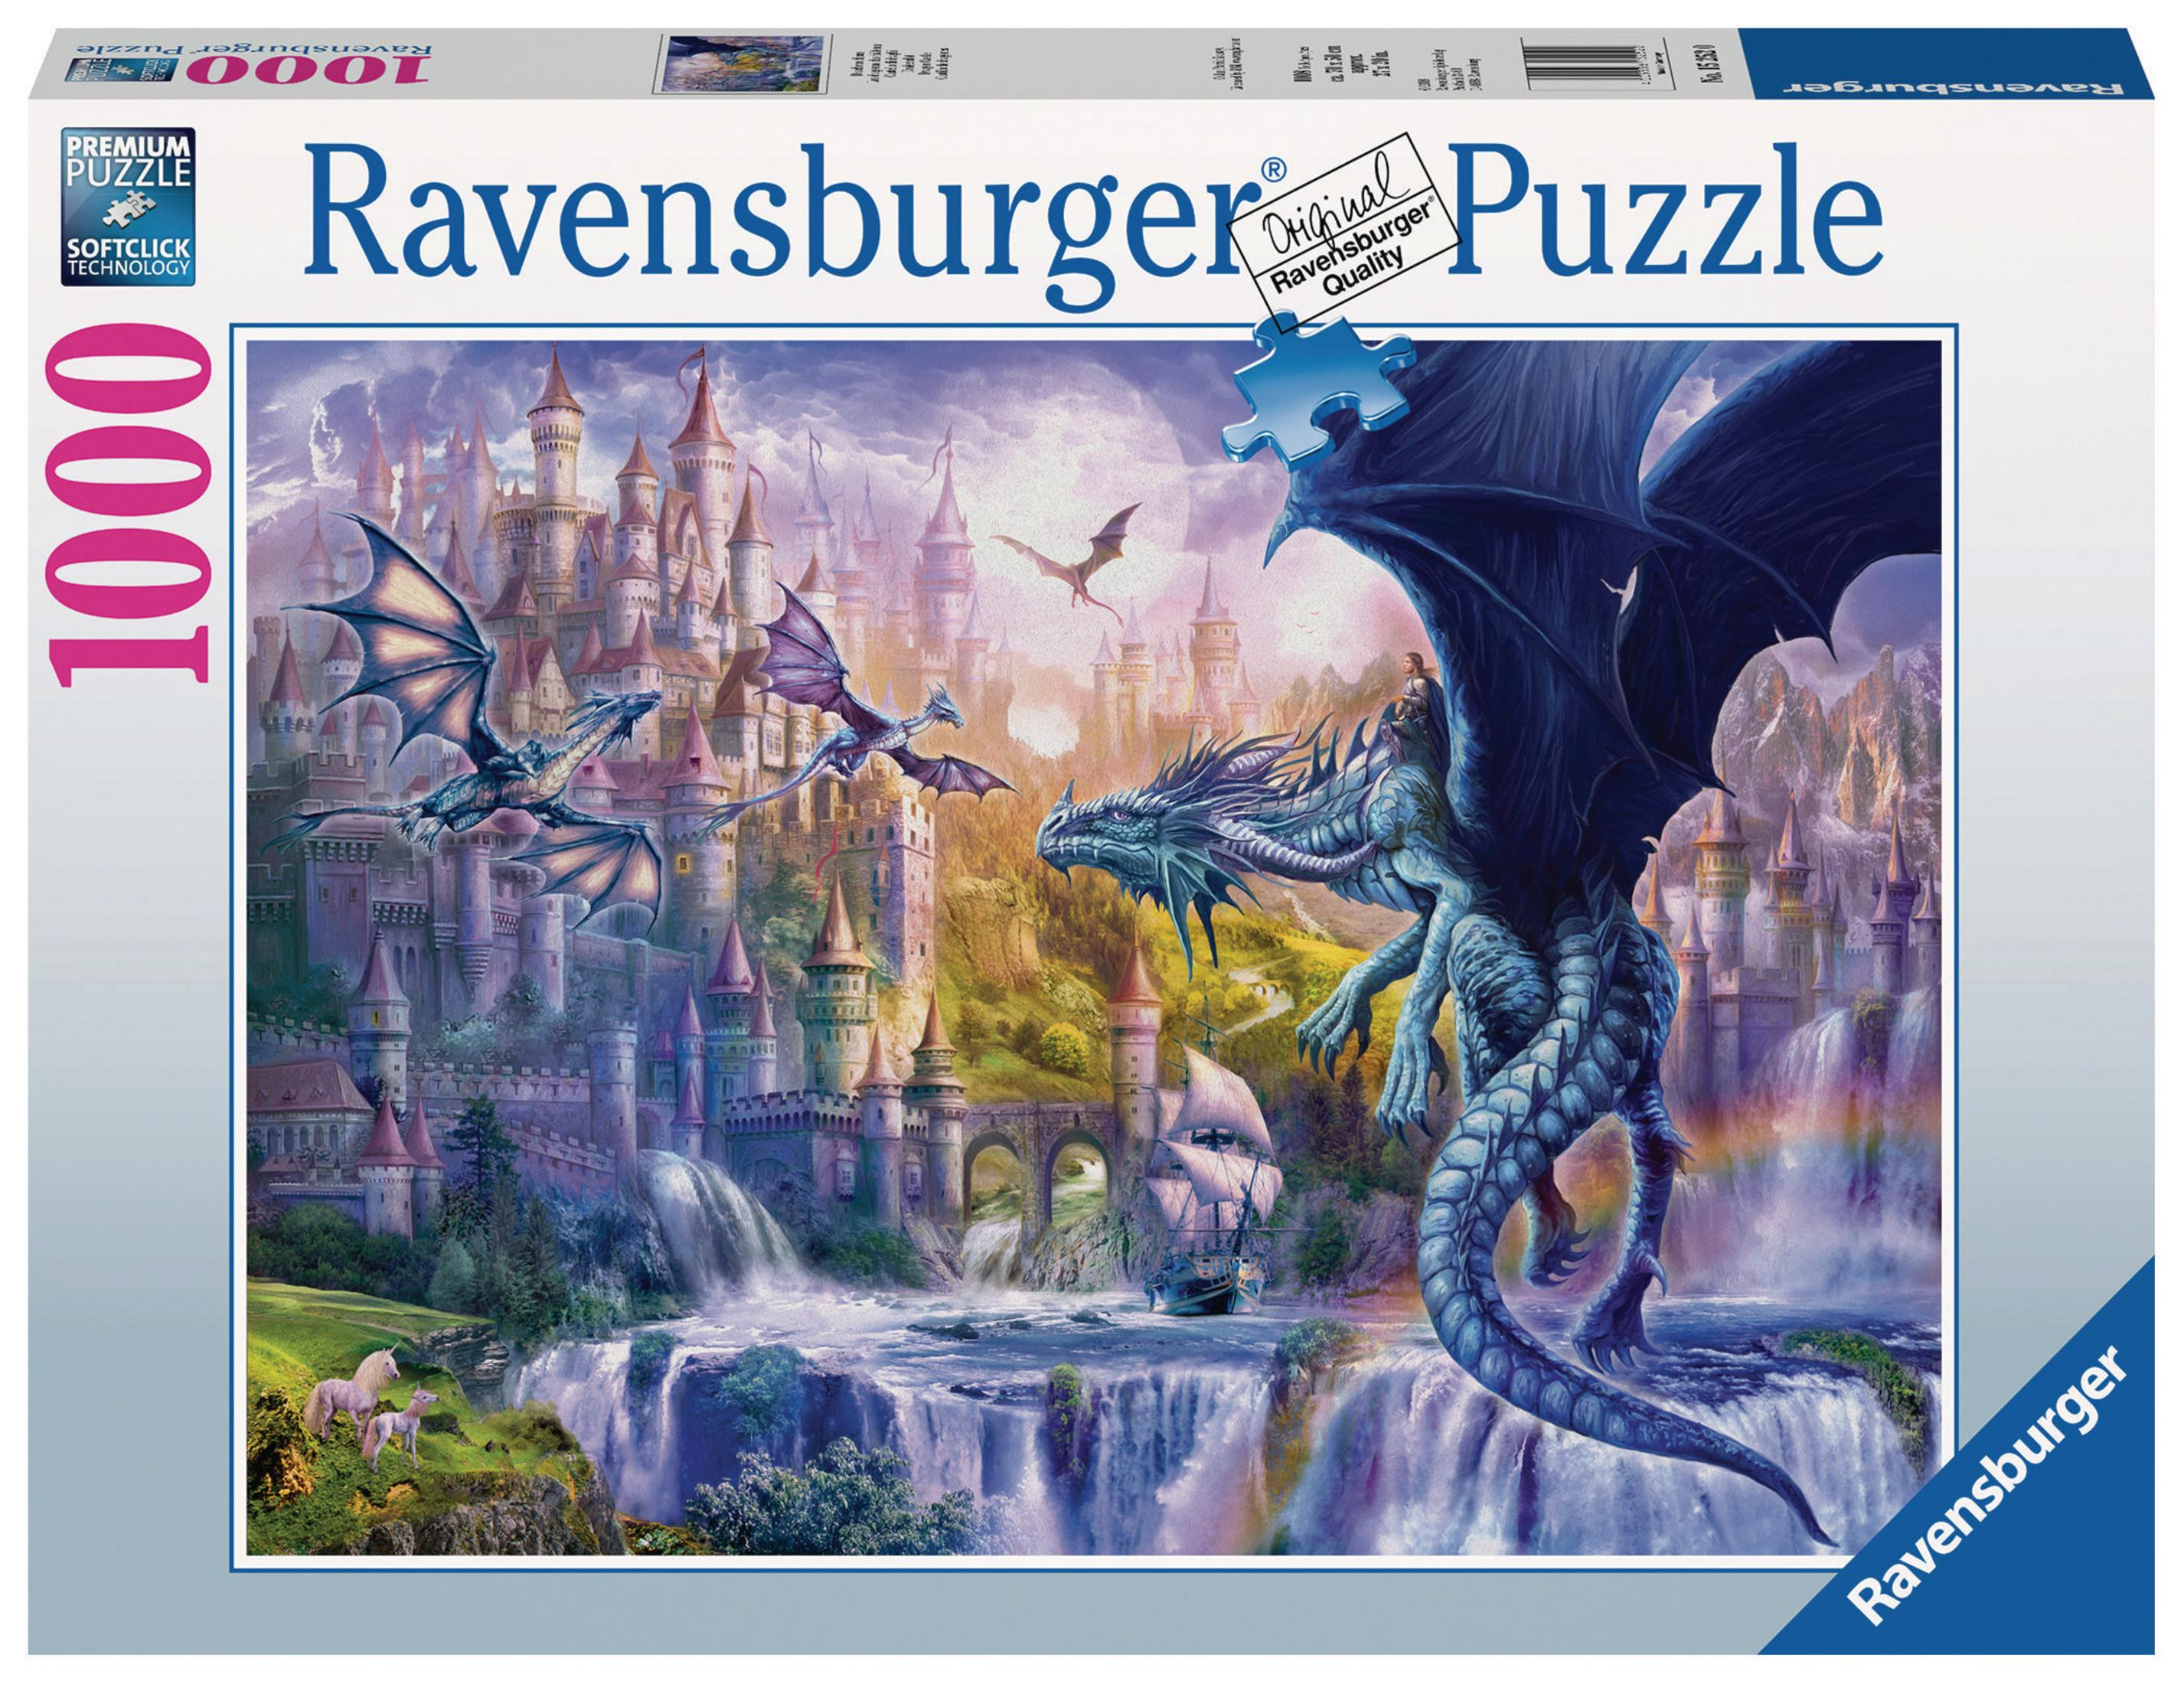 DRACHENSCHLOSS Puzzle 15252 RAVENSBURGER